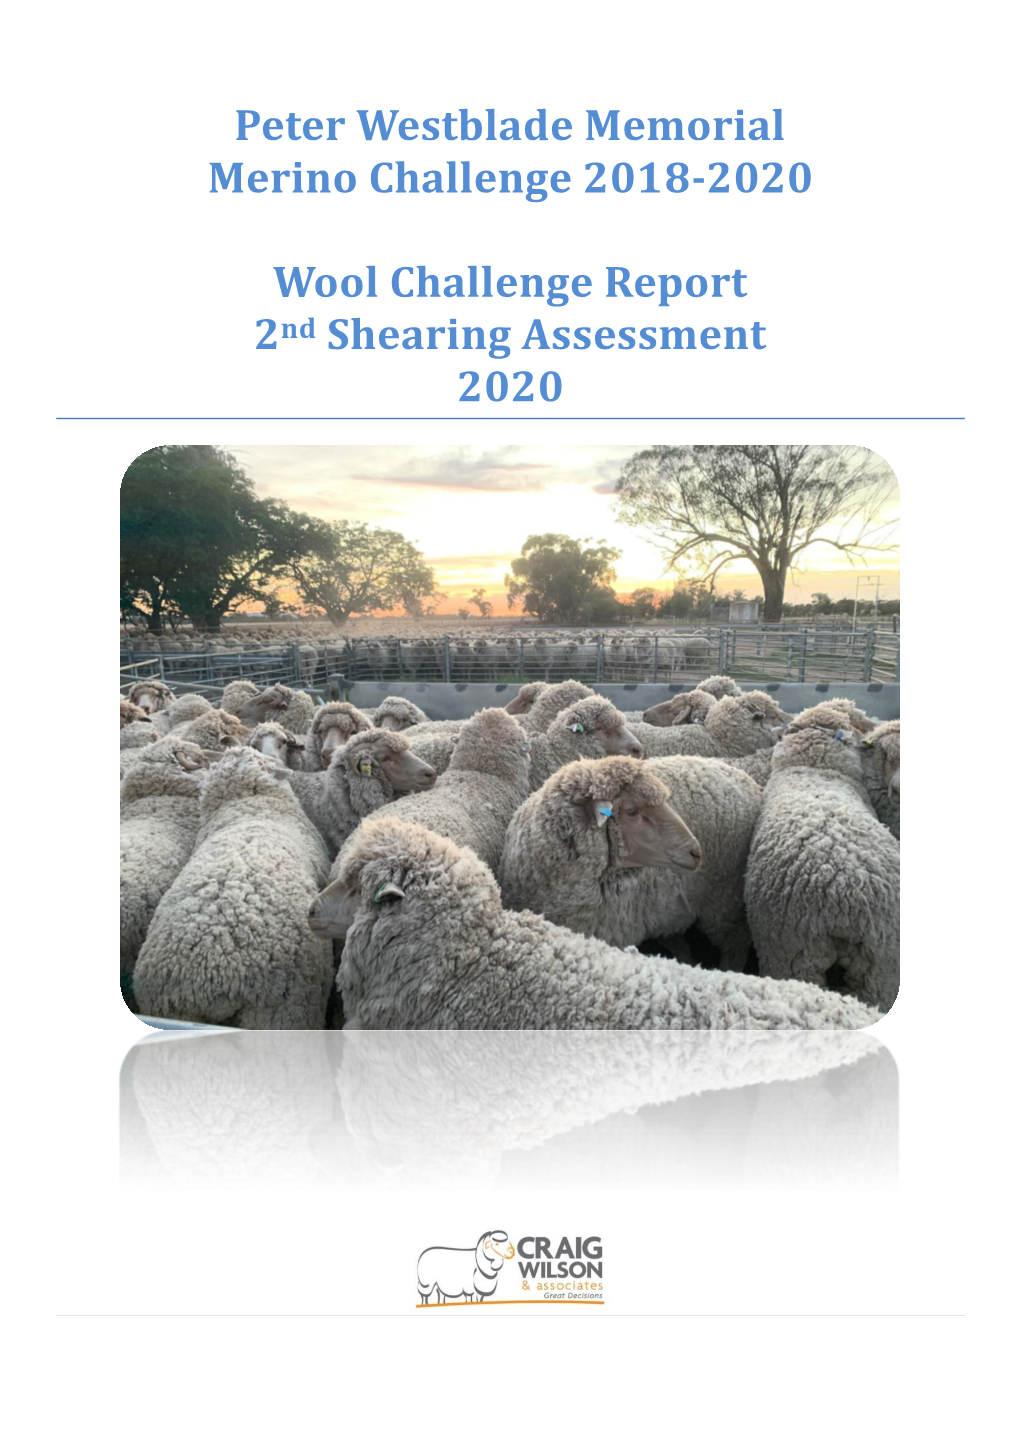 Peter Westblade Memorial Merino Challenge 2020 Wool Report